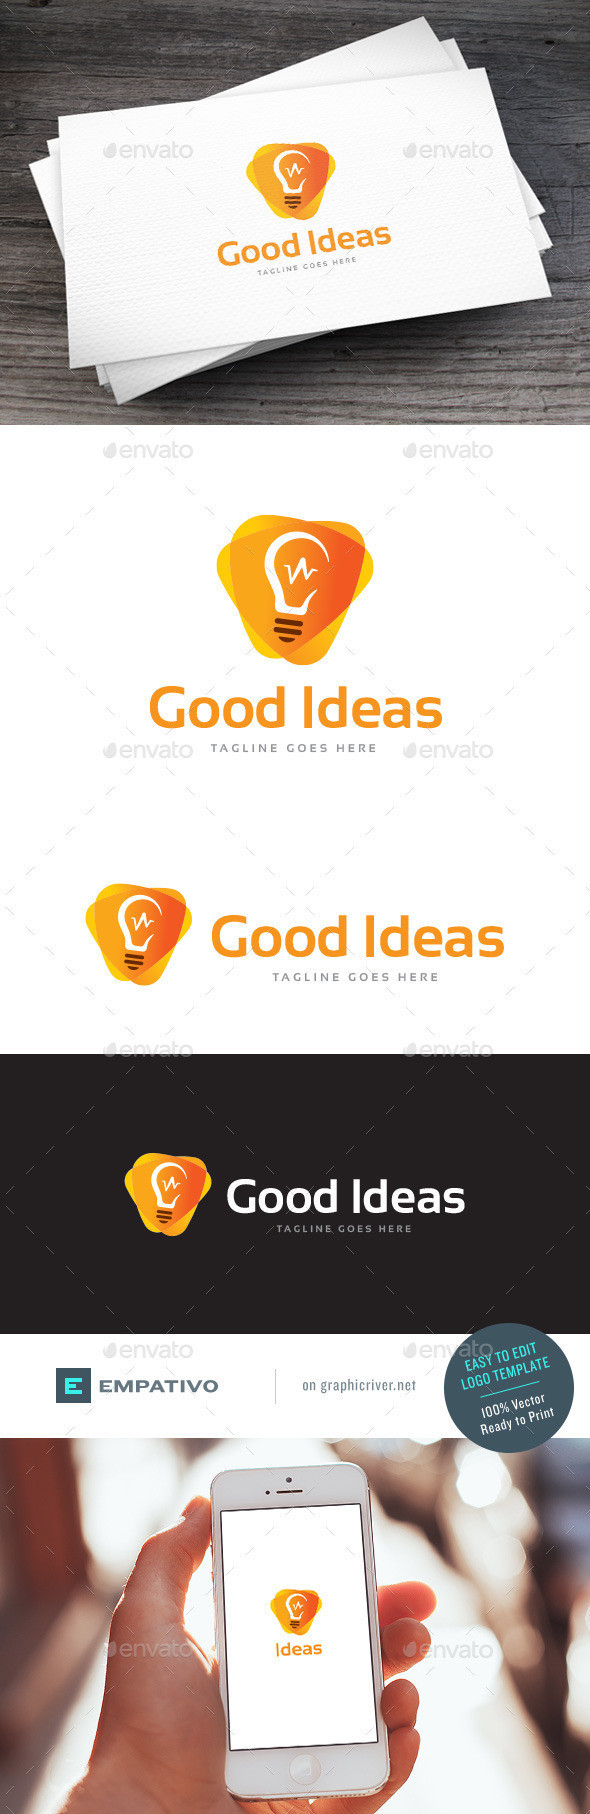 Good ideas logo template